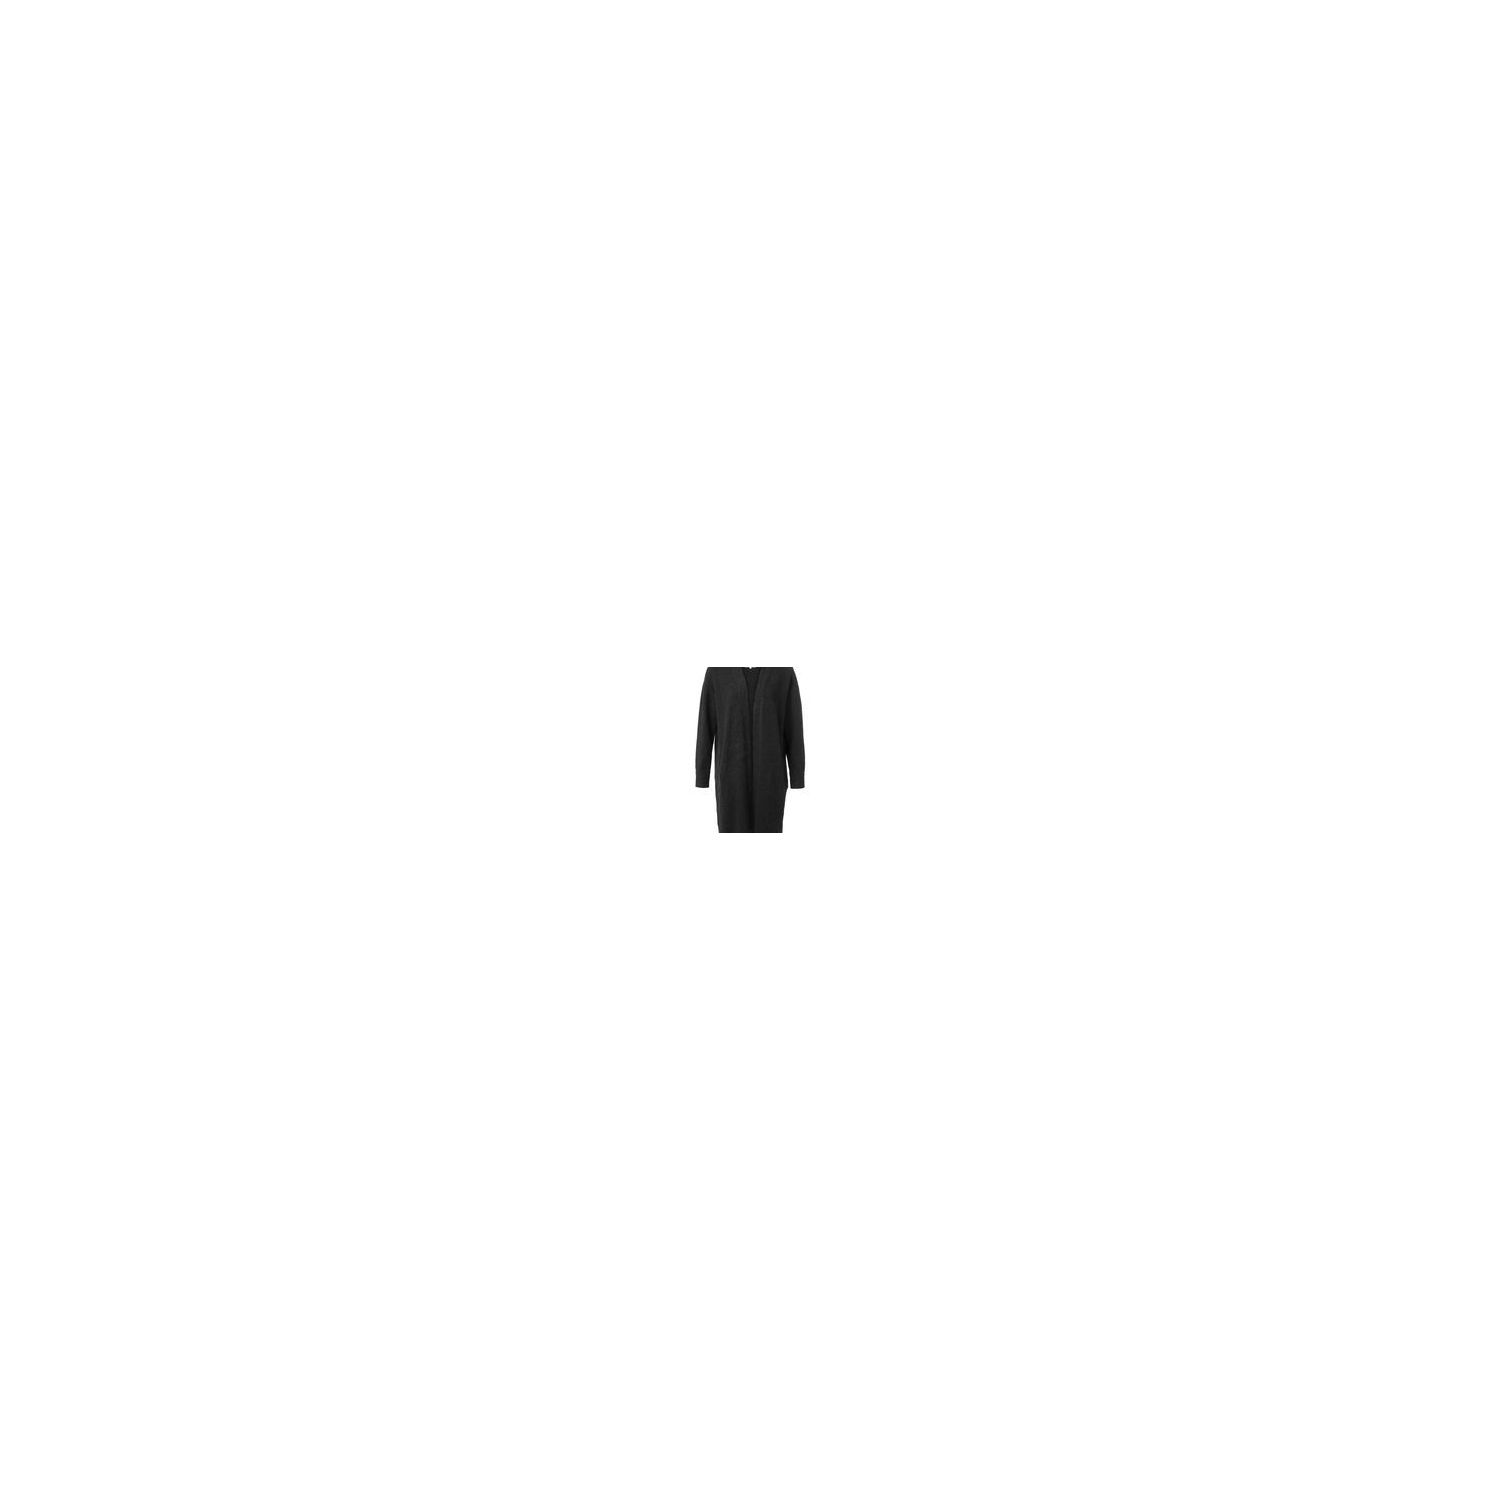 Yaya long cardigan with side pockets black